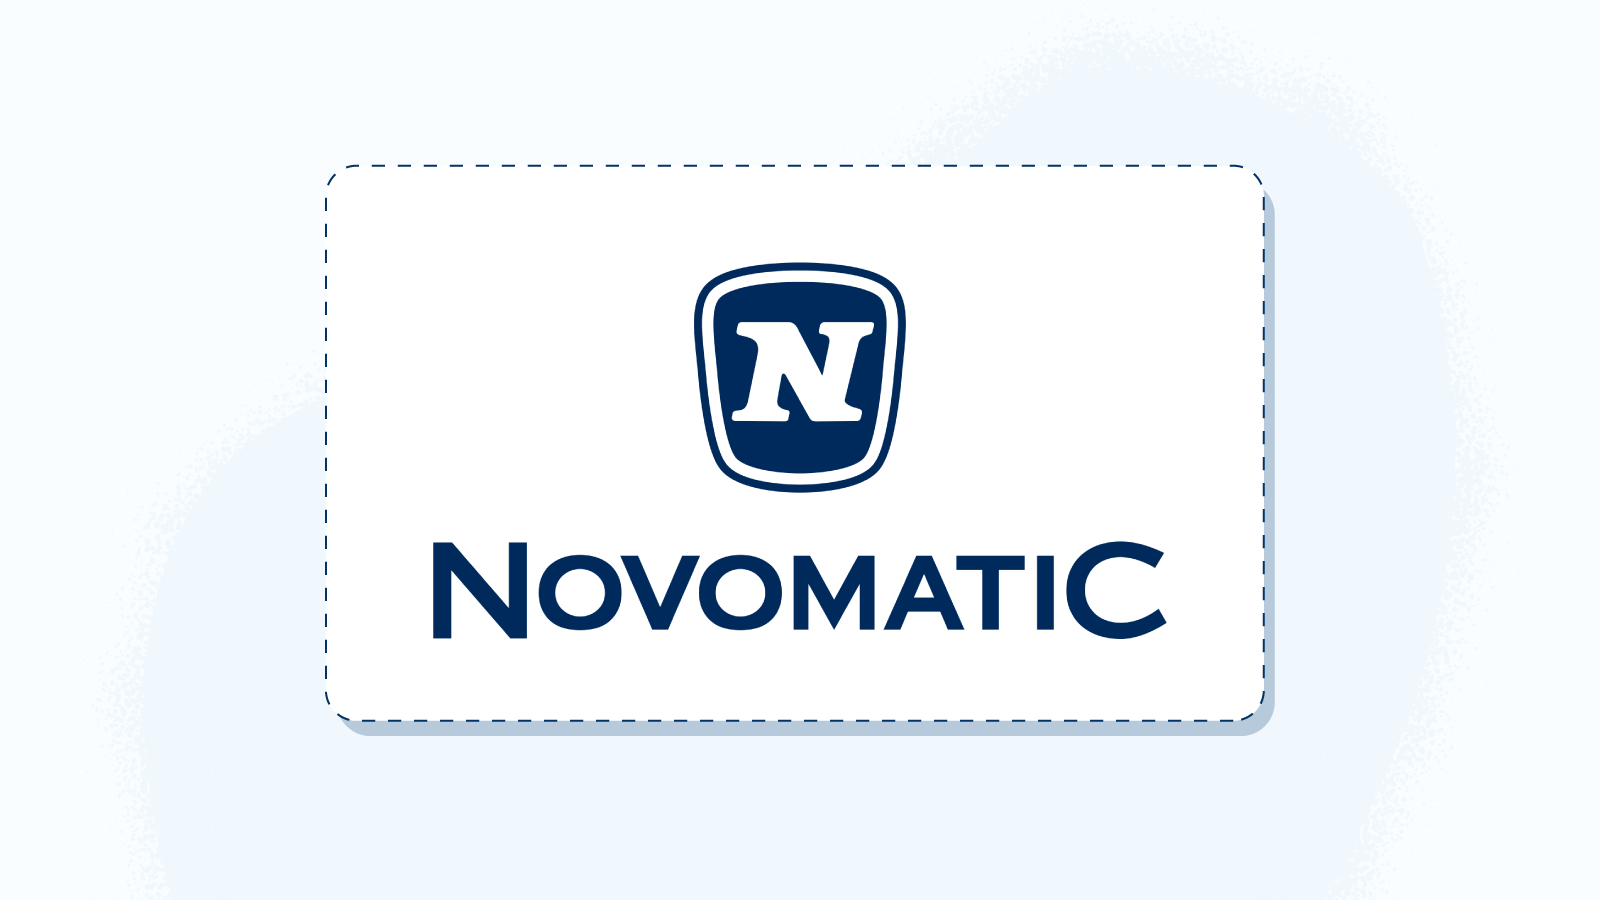 #4. Novomatic